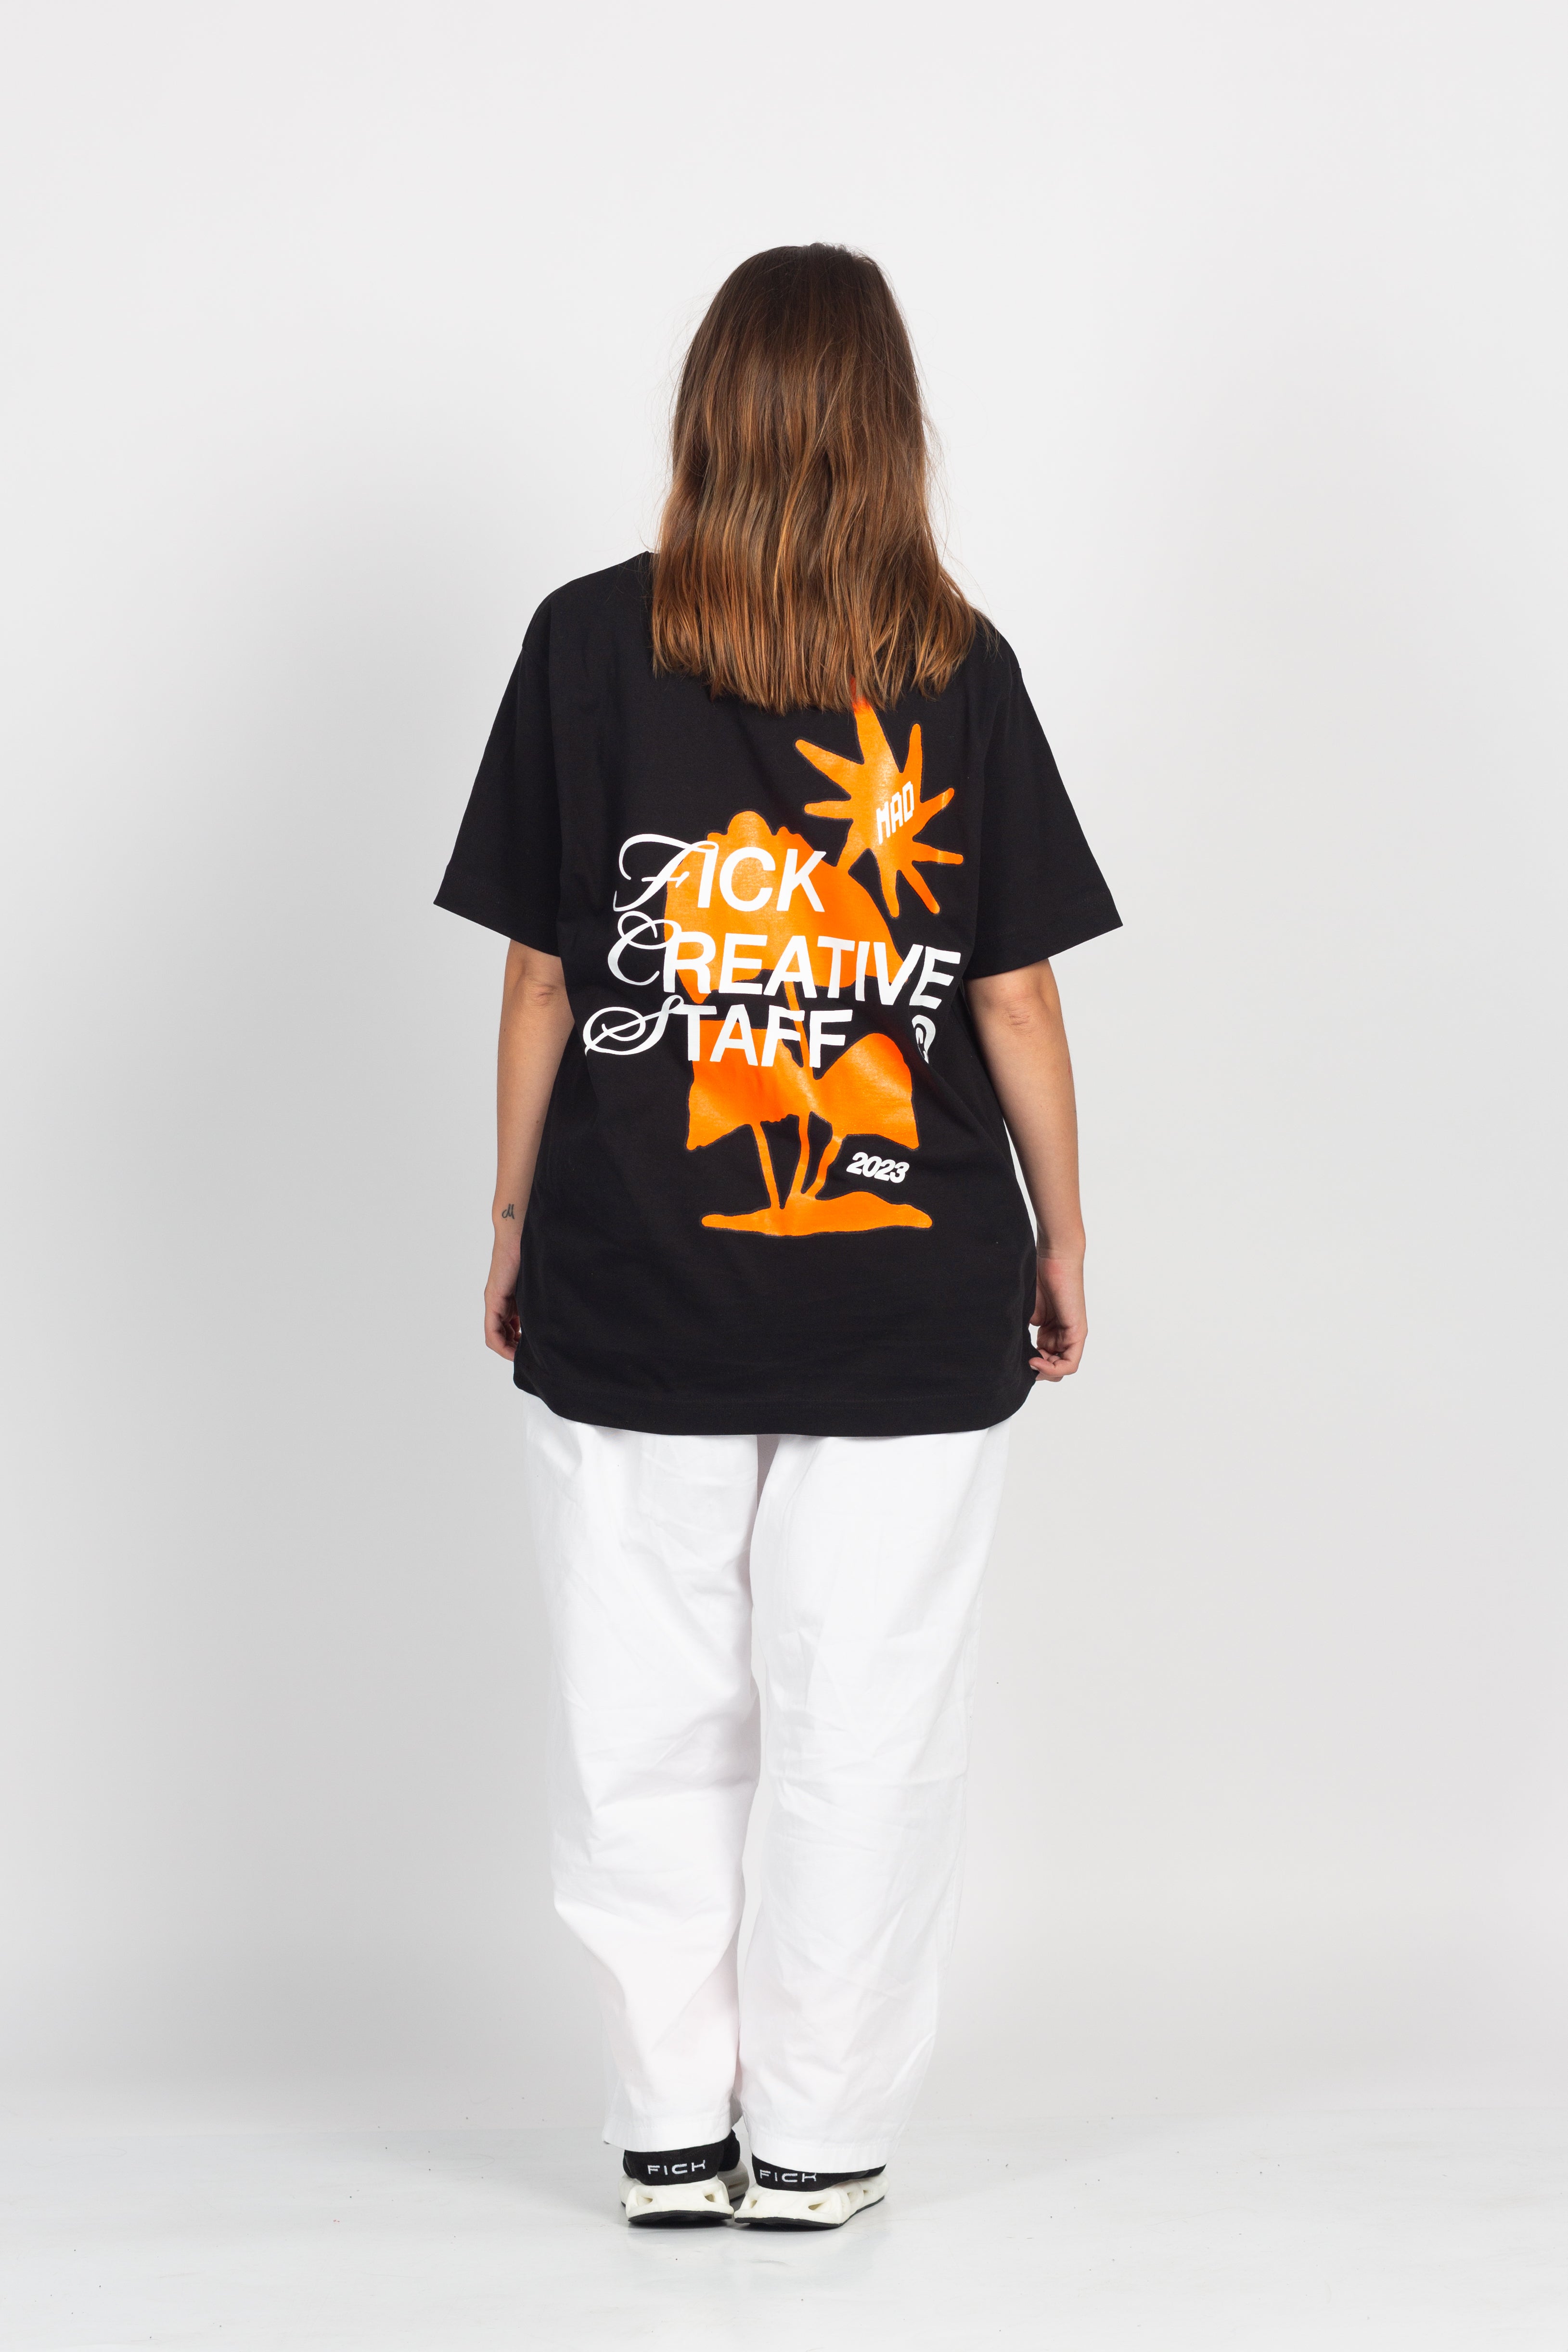 Camiseta Fick Creative Staff Black